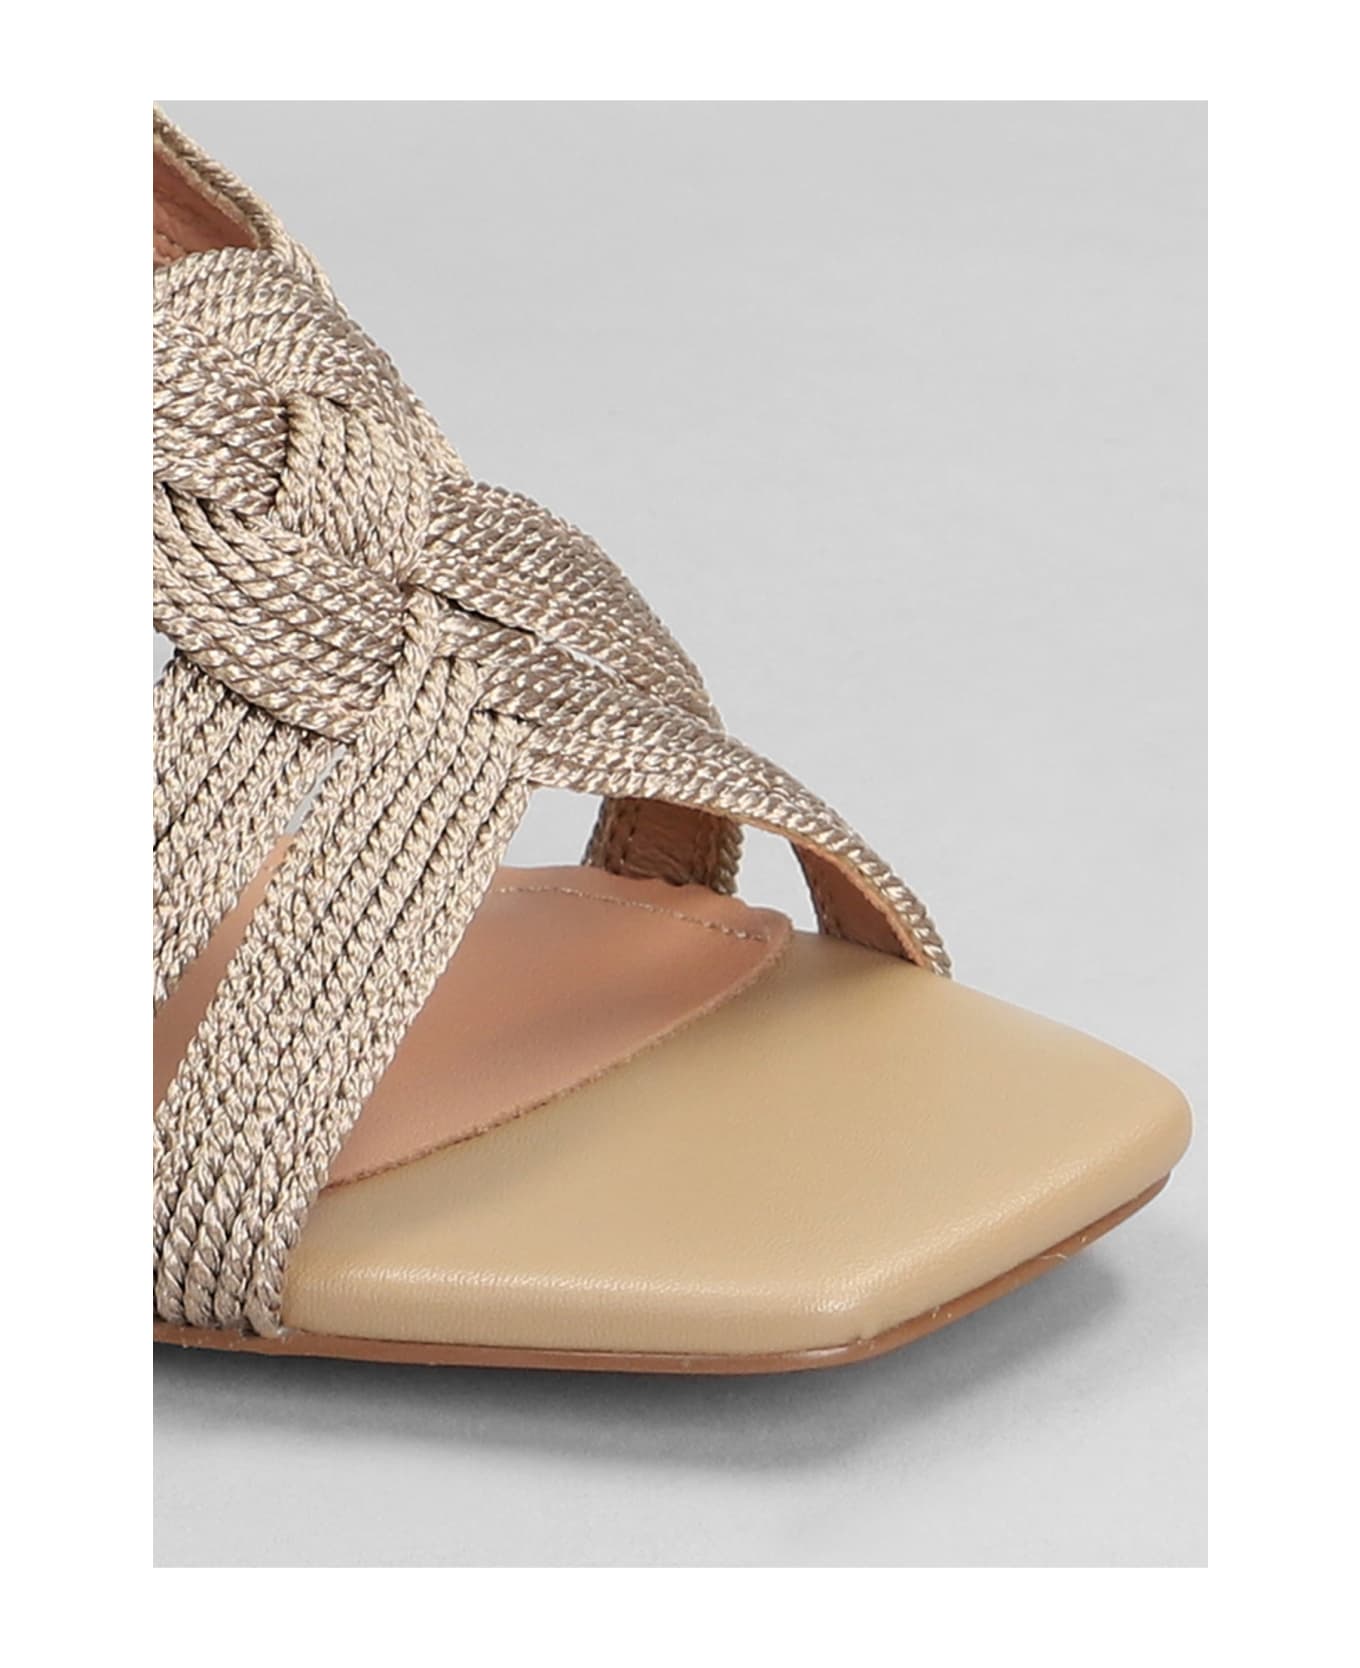 Bibi Lou Setsuko Sandals In Camel Leather - Camel